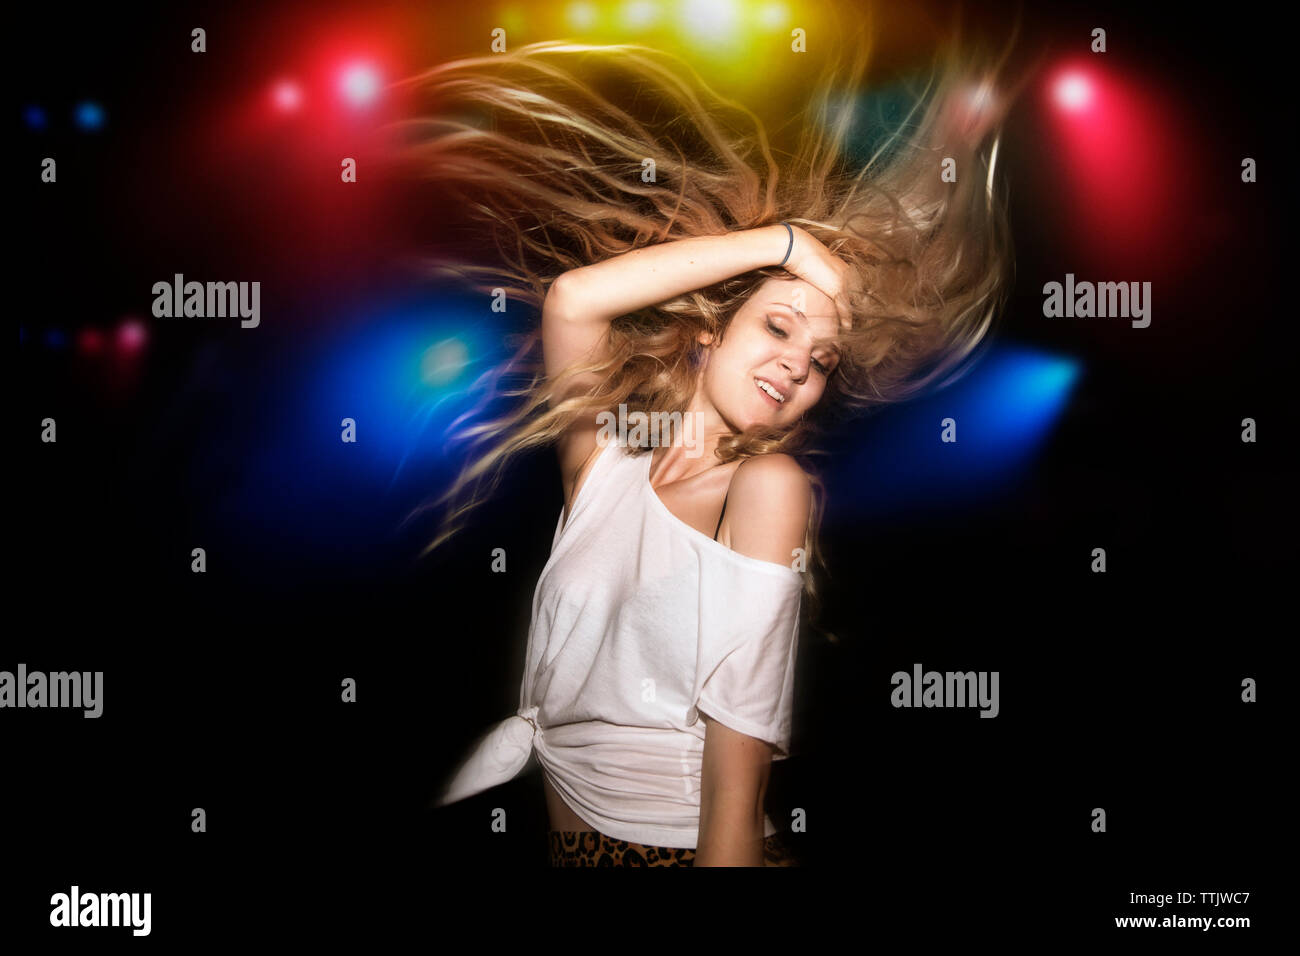 Mujer con cabello rubio bailando contra encendido luces multicolores en garden party Foto de stock